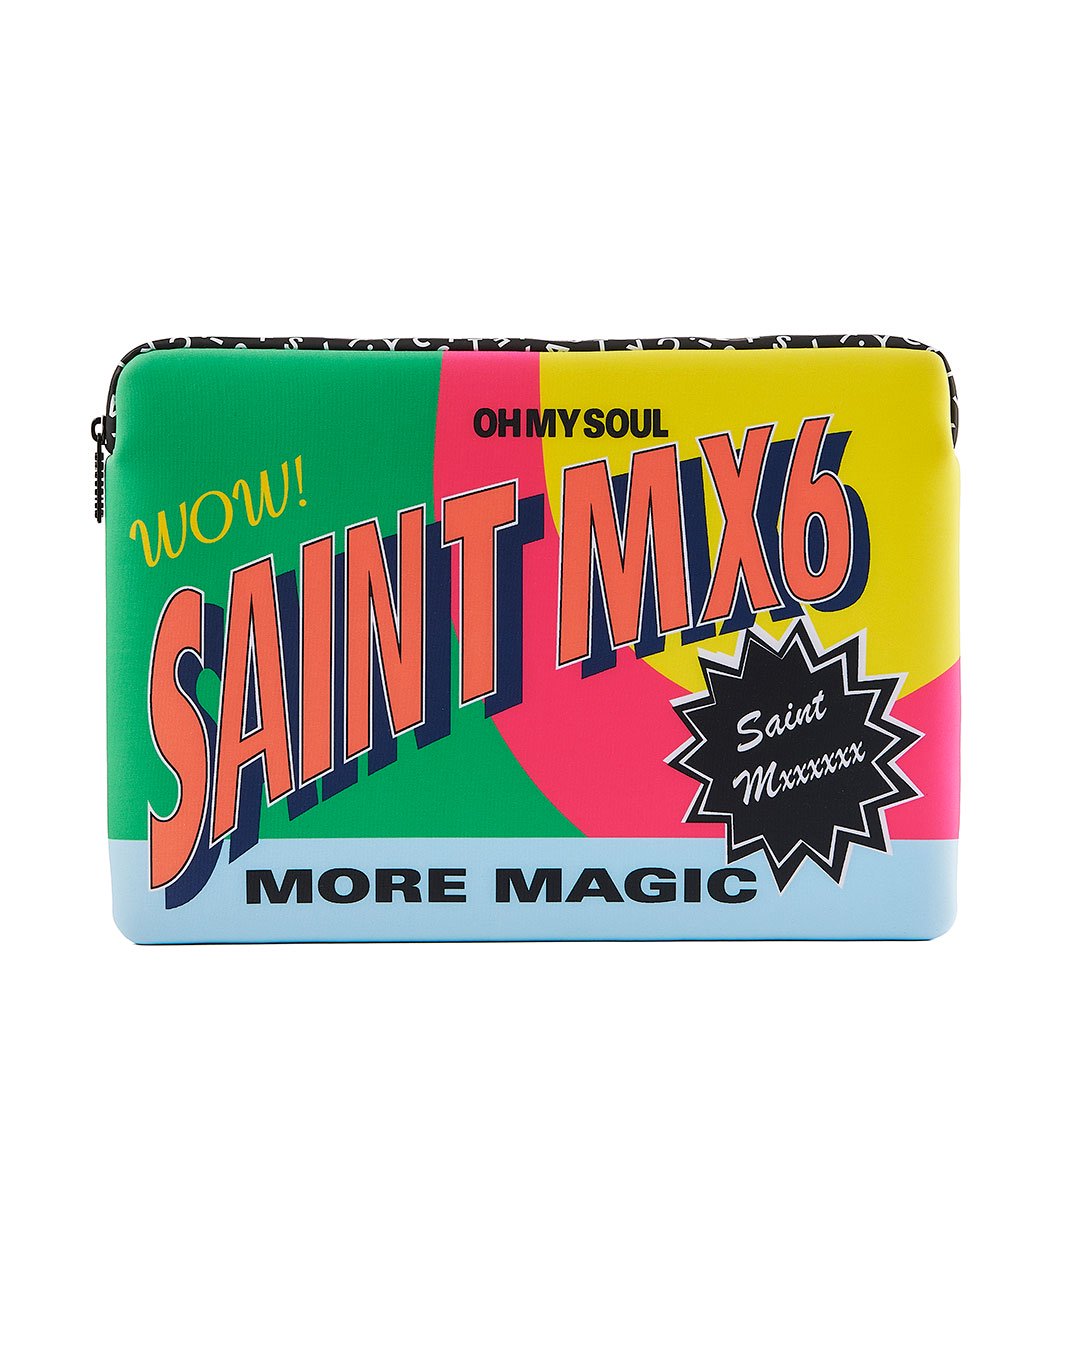 Saint MxXXXXX More Magic Phone Case - iPhoneアクセサリー